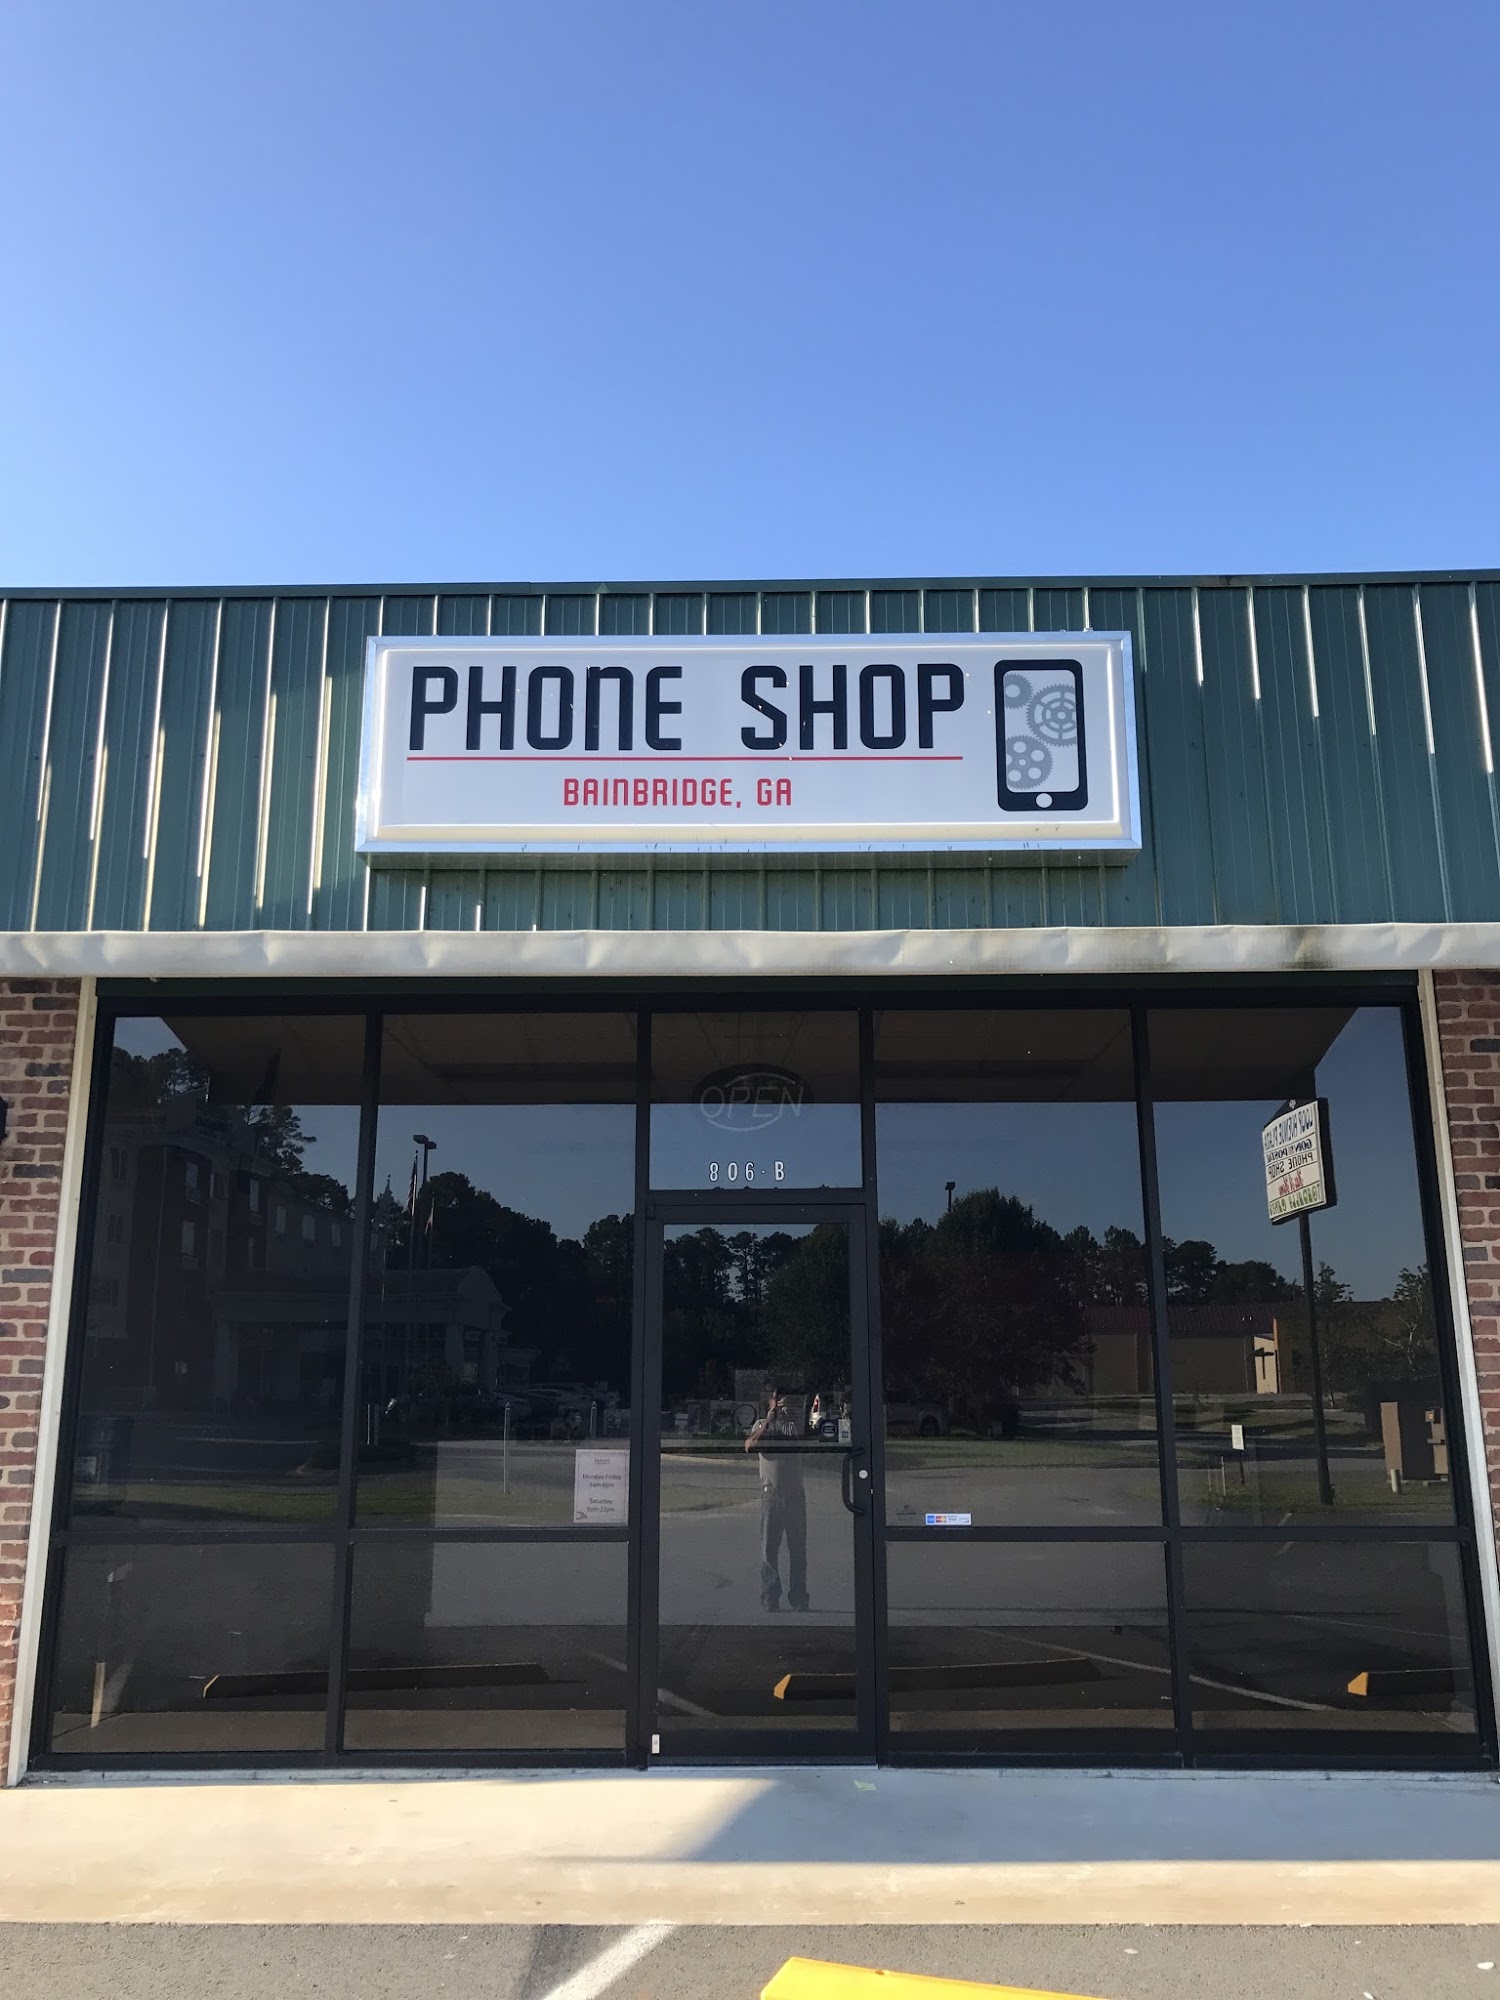 The Phone Shop of Bainbridge